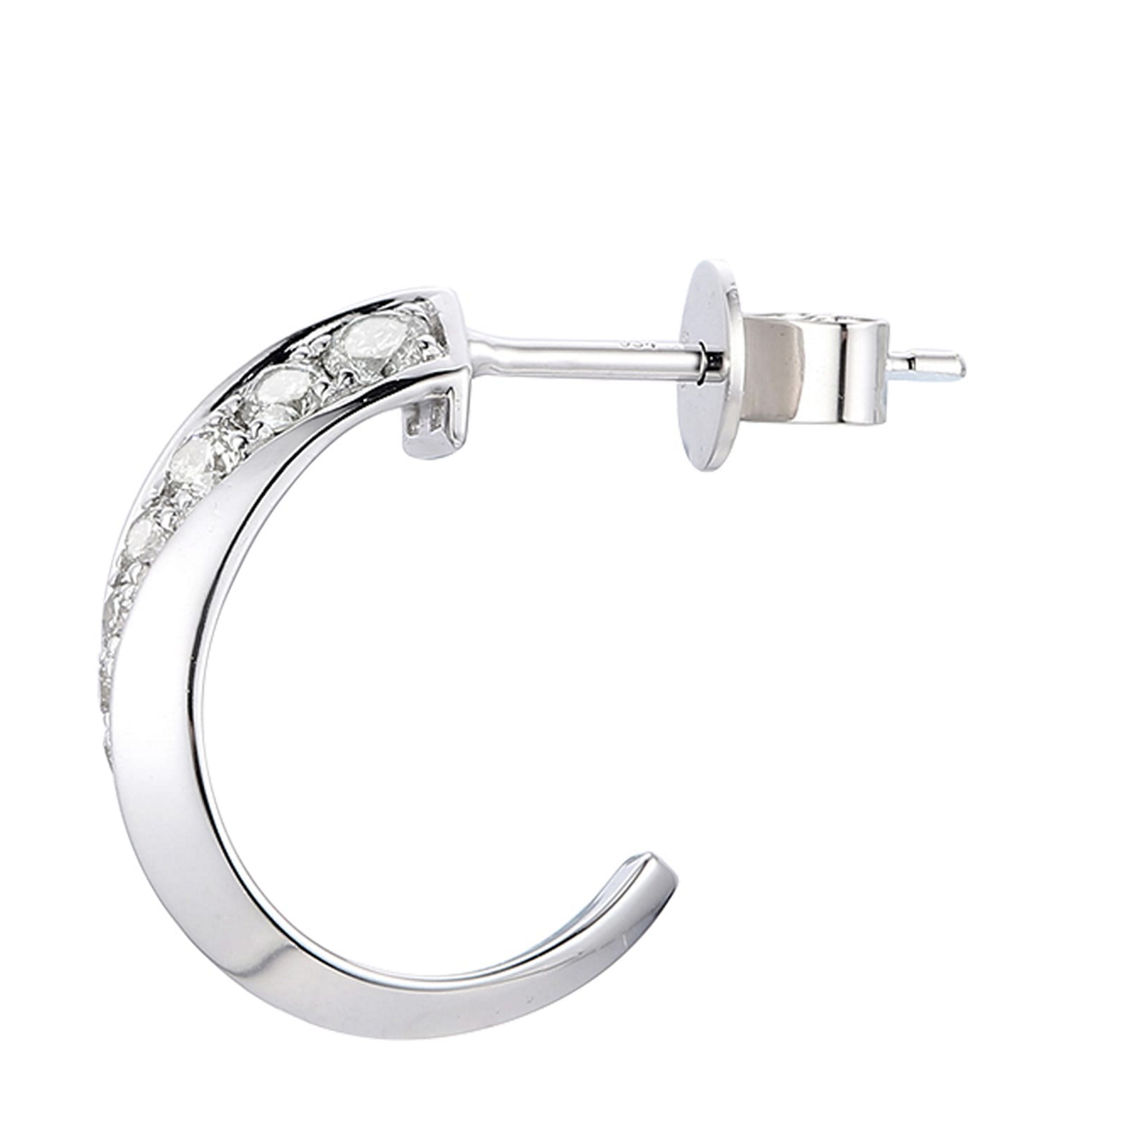 KGK 14K White Gold 0.39cttw Round cut Diamond Earring - Image 3 of 3